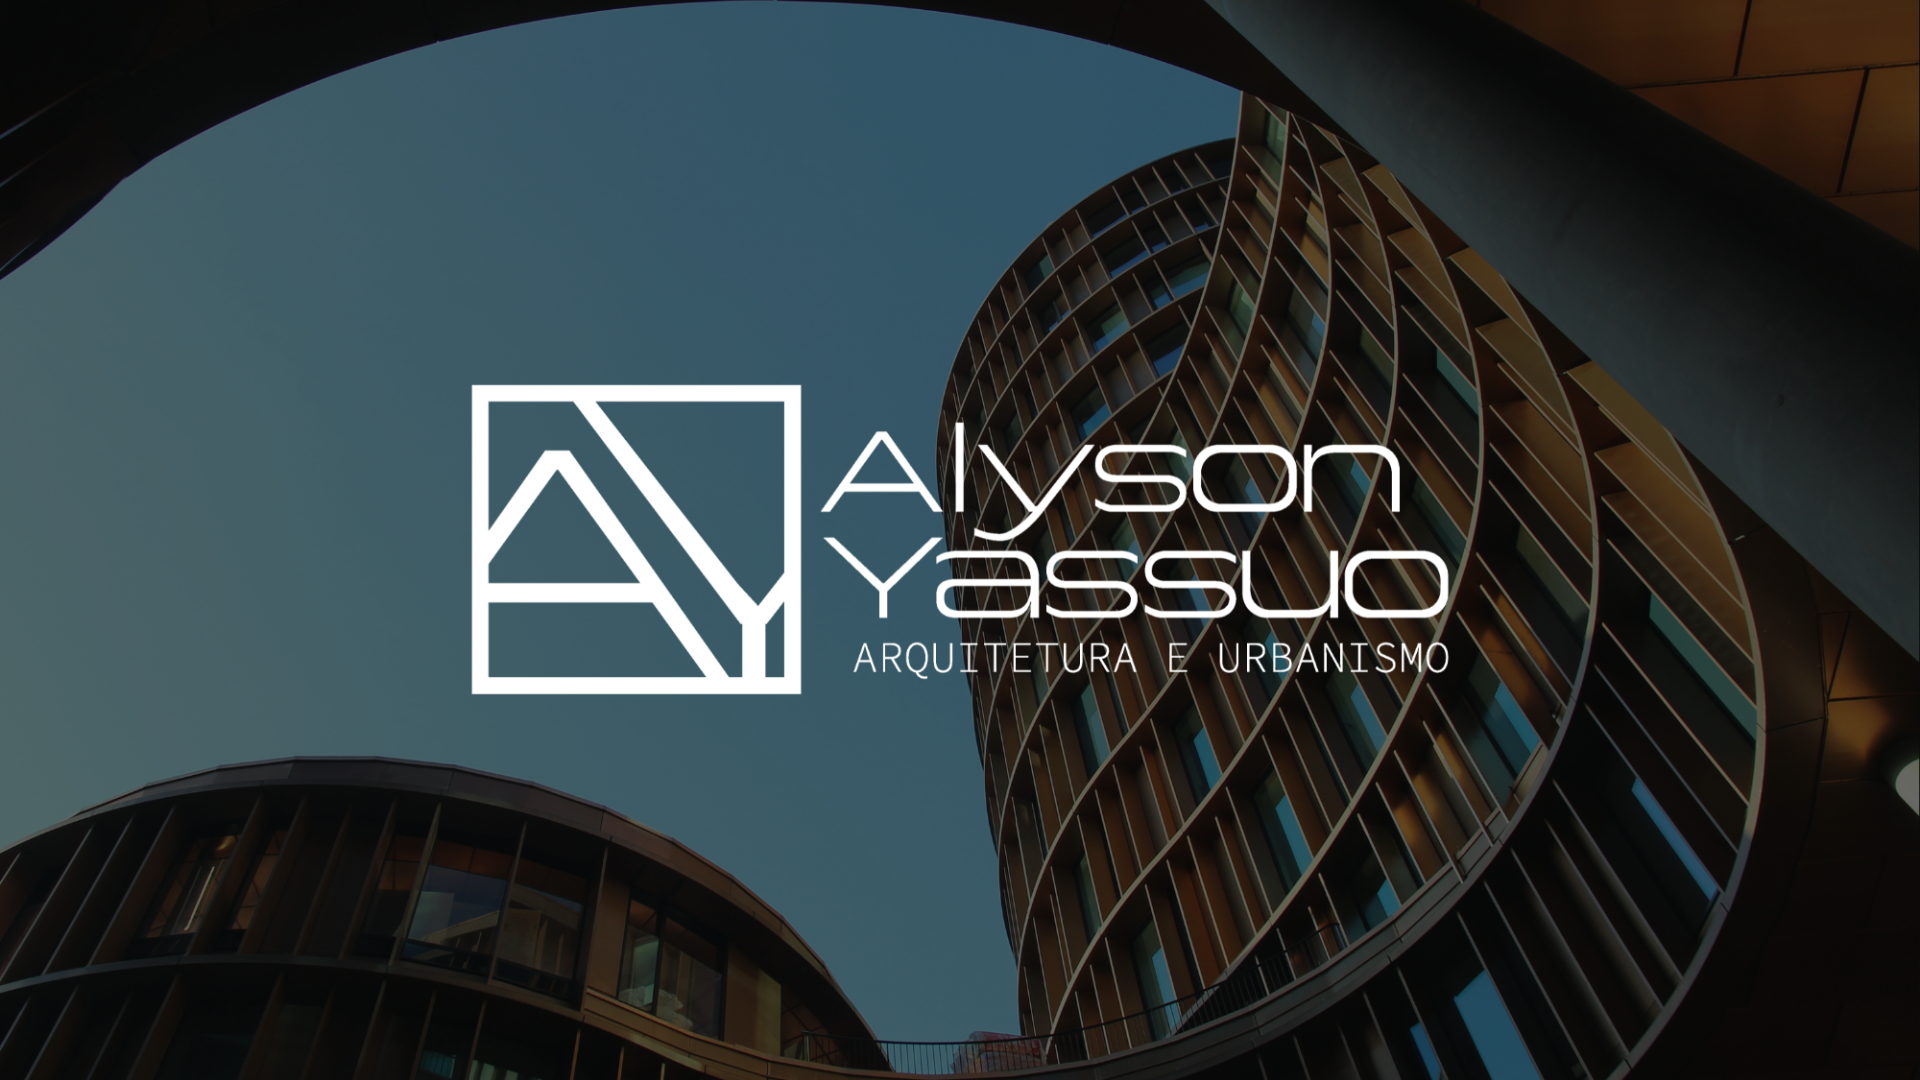 Alyson Yassuo - Arquitetura e Urbanismo